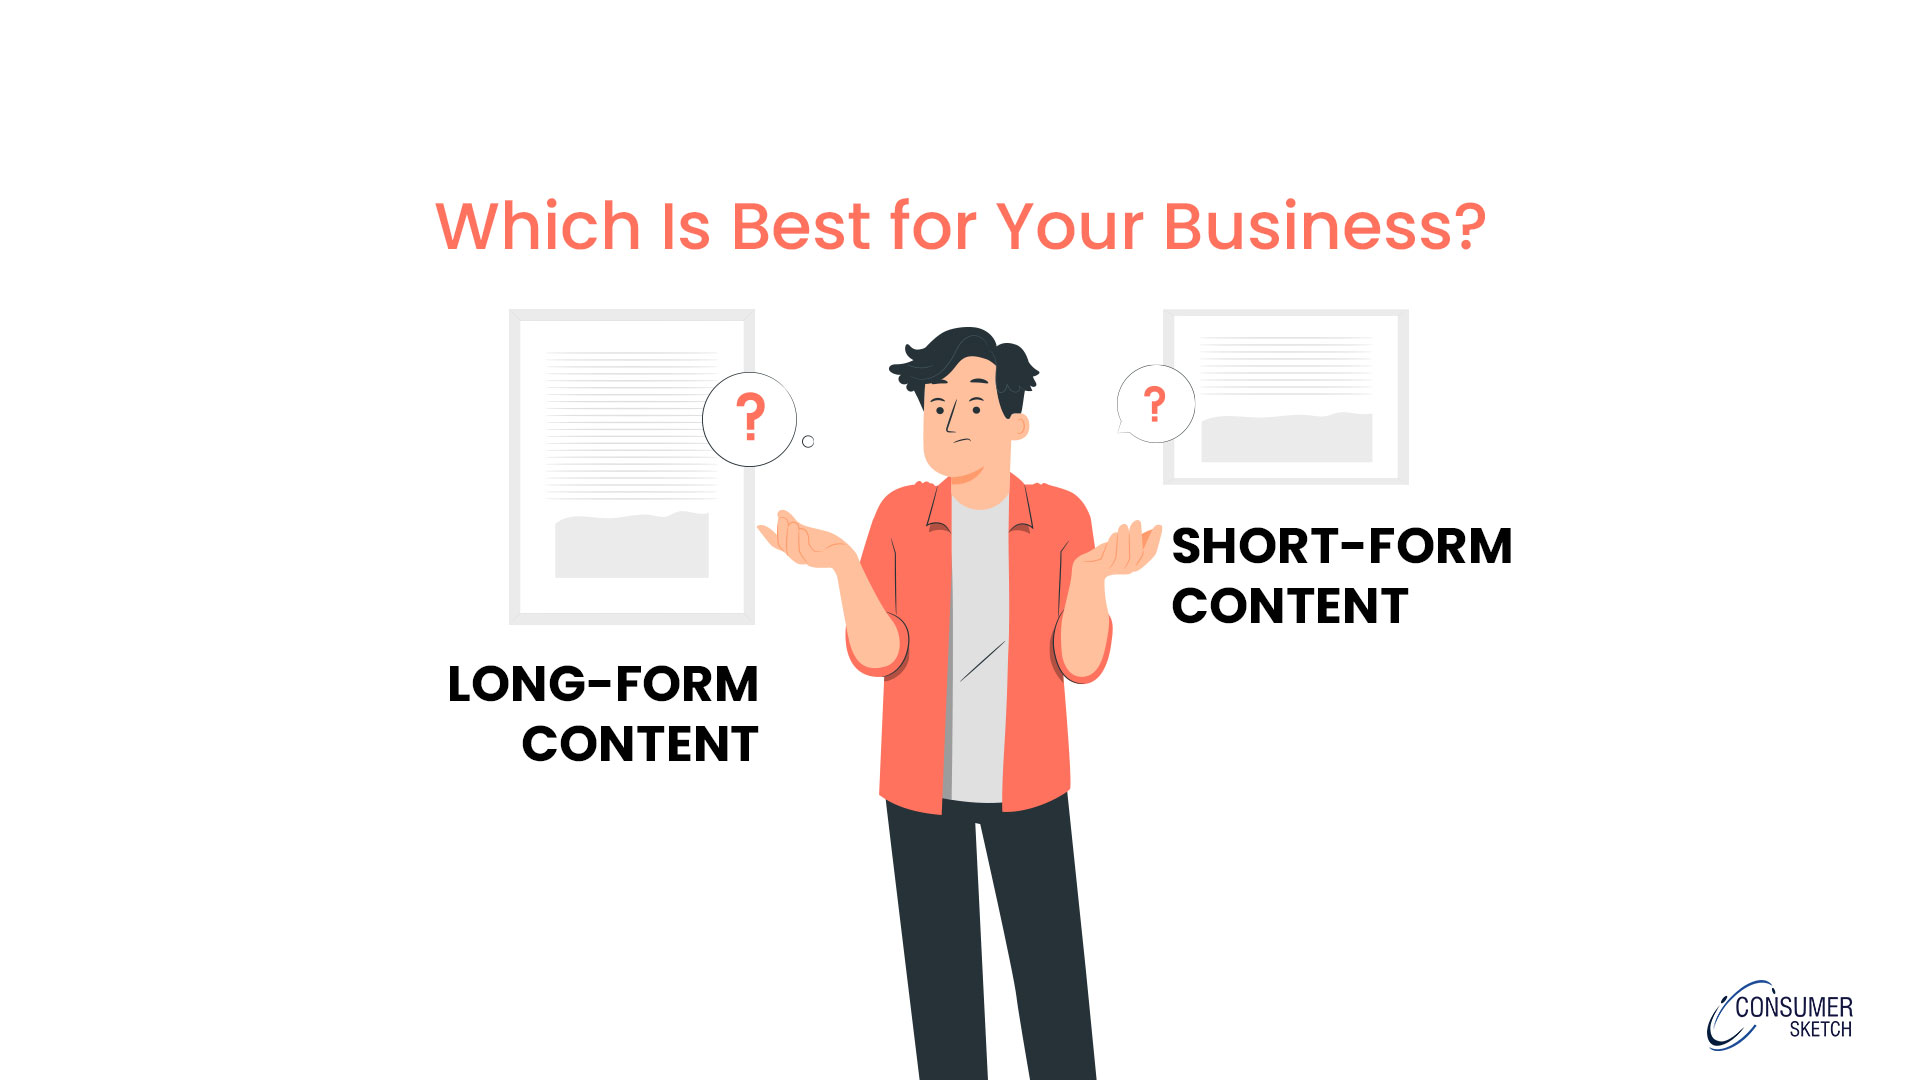 Long-Form Content vs Short-Form Content